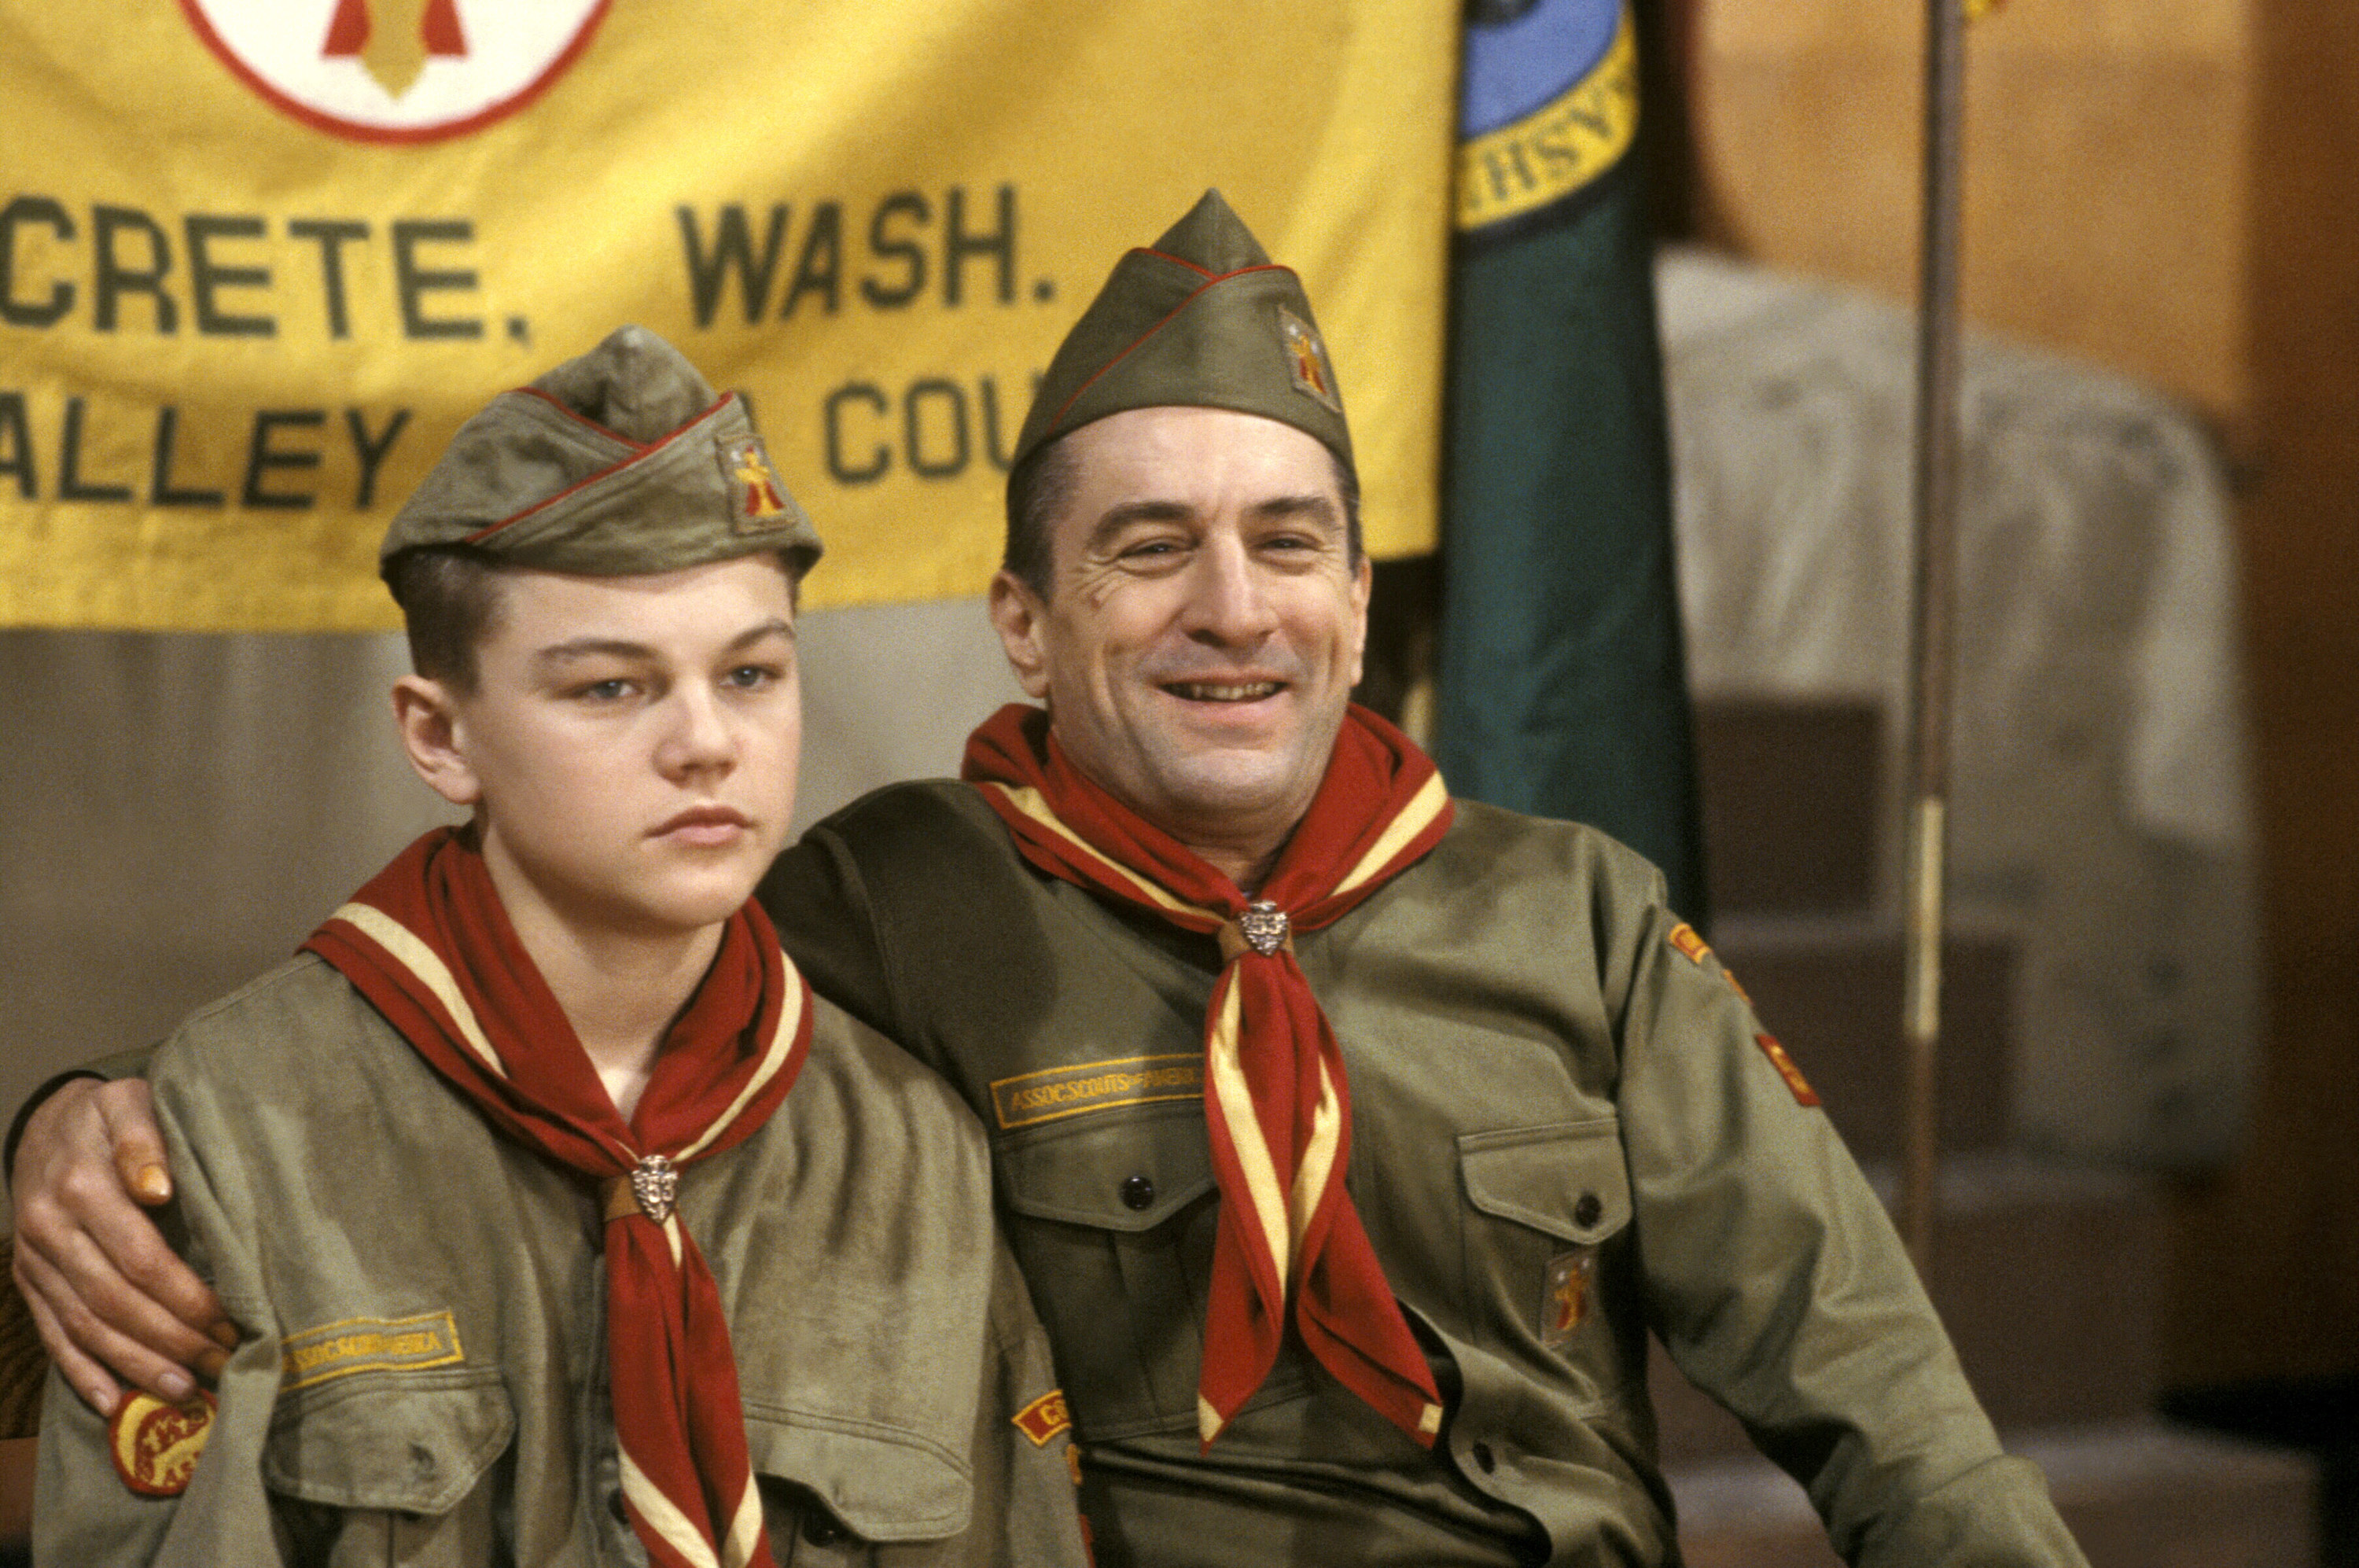 Leonardo DiCaprio and Robert De Niro sit together in Boy Scout uniforms